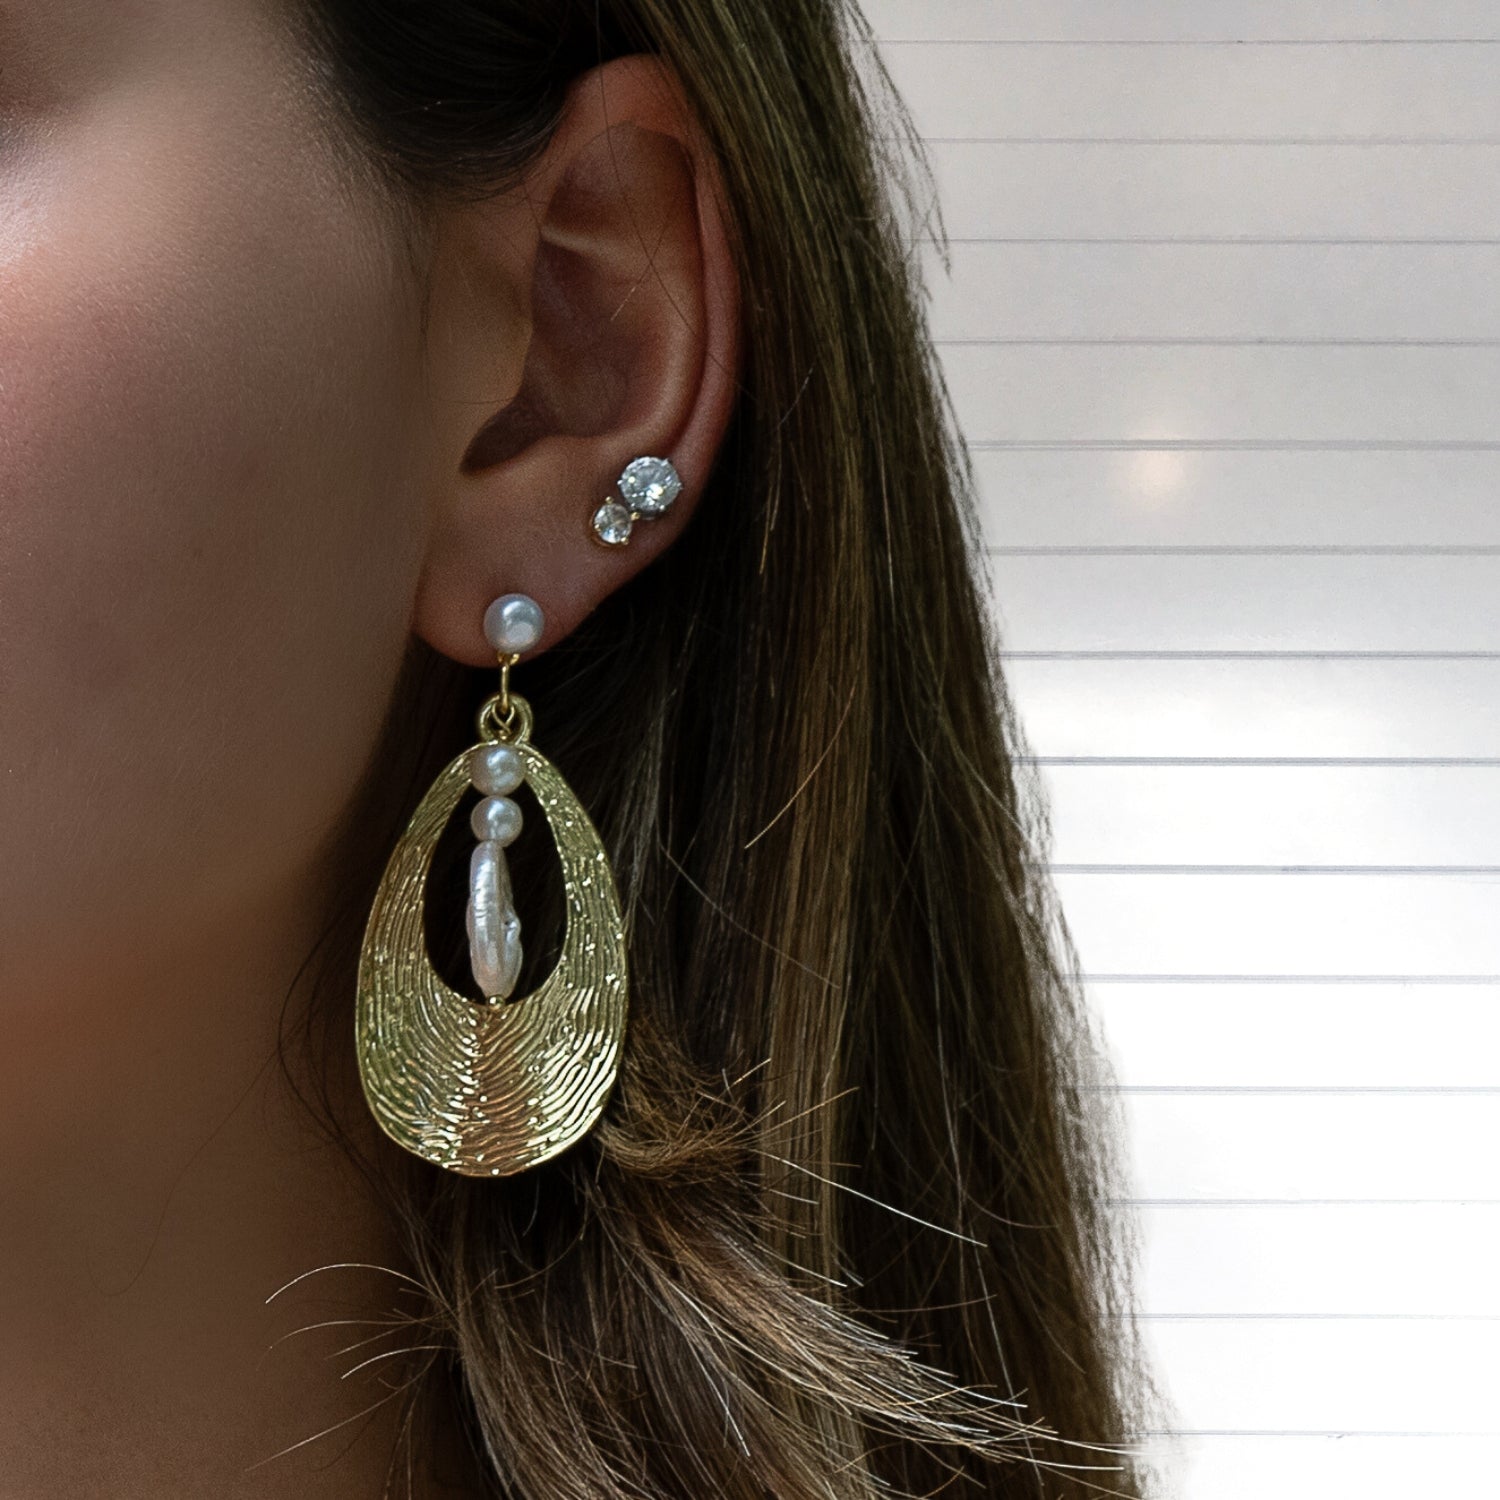 Ethereal Aura: Model in Gold & Pearl Dangle Earrings, Boho Chic.